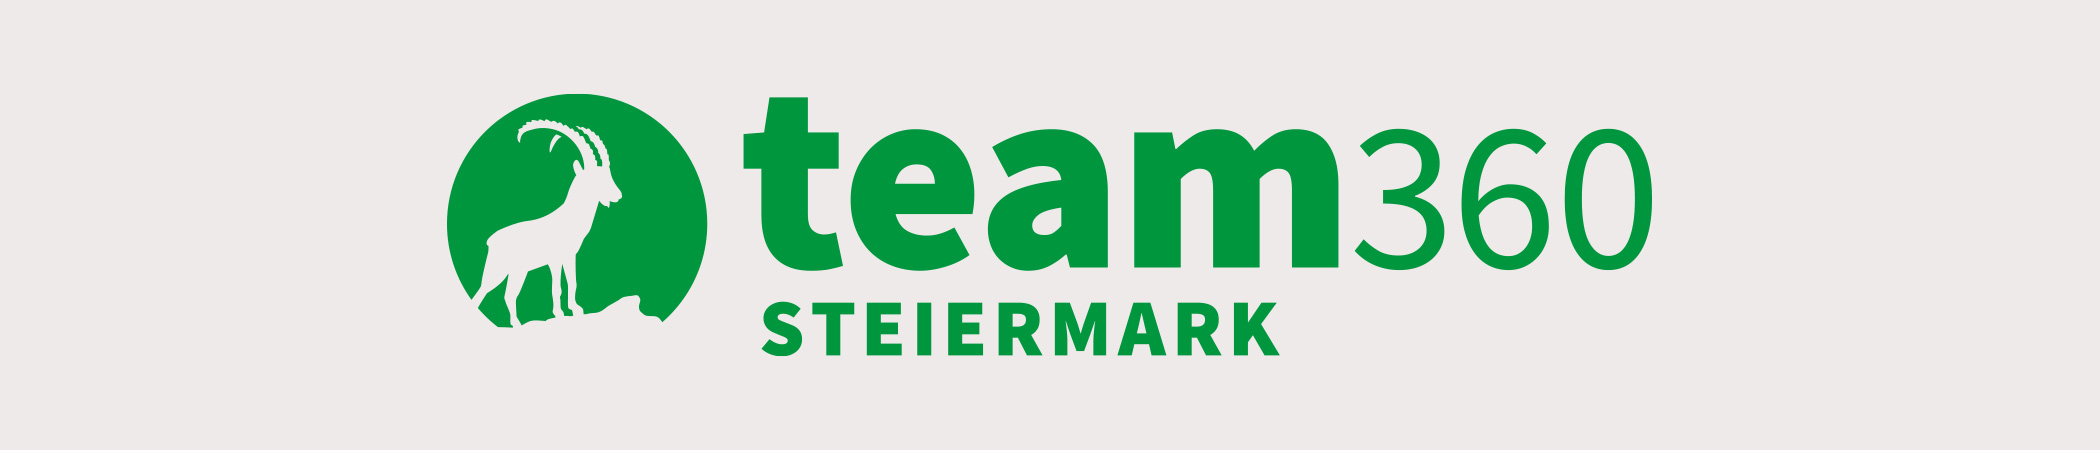 Team Steiermark | 360 Grad Rundgänge